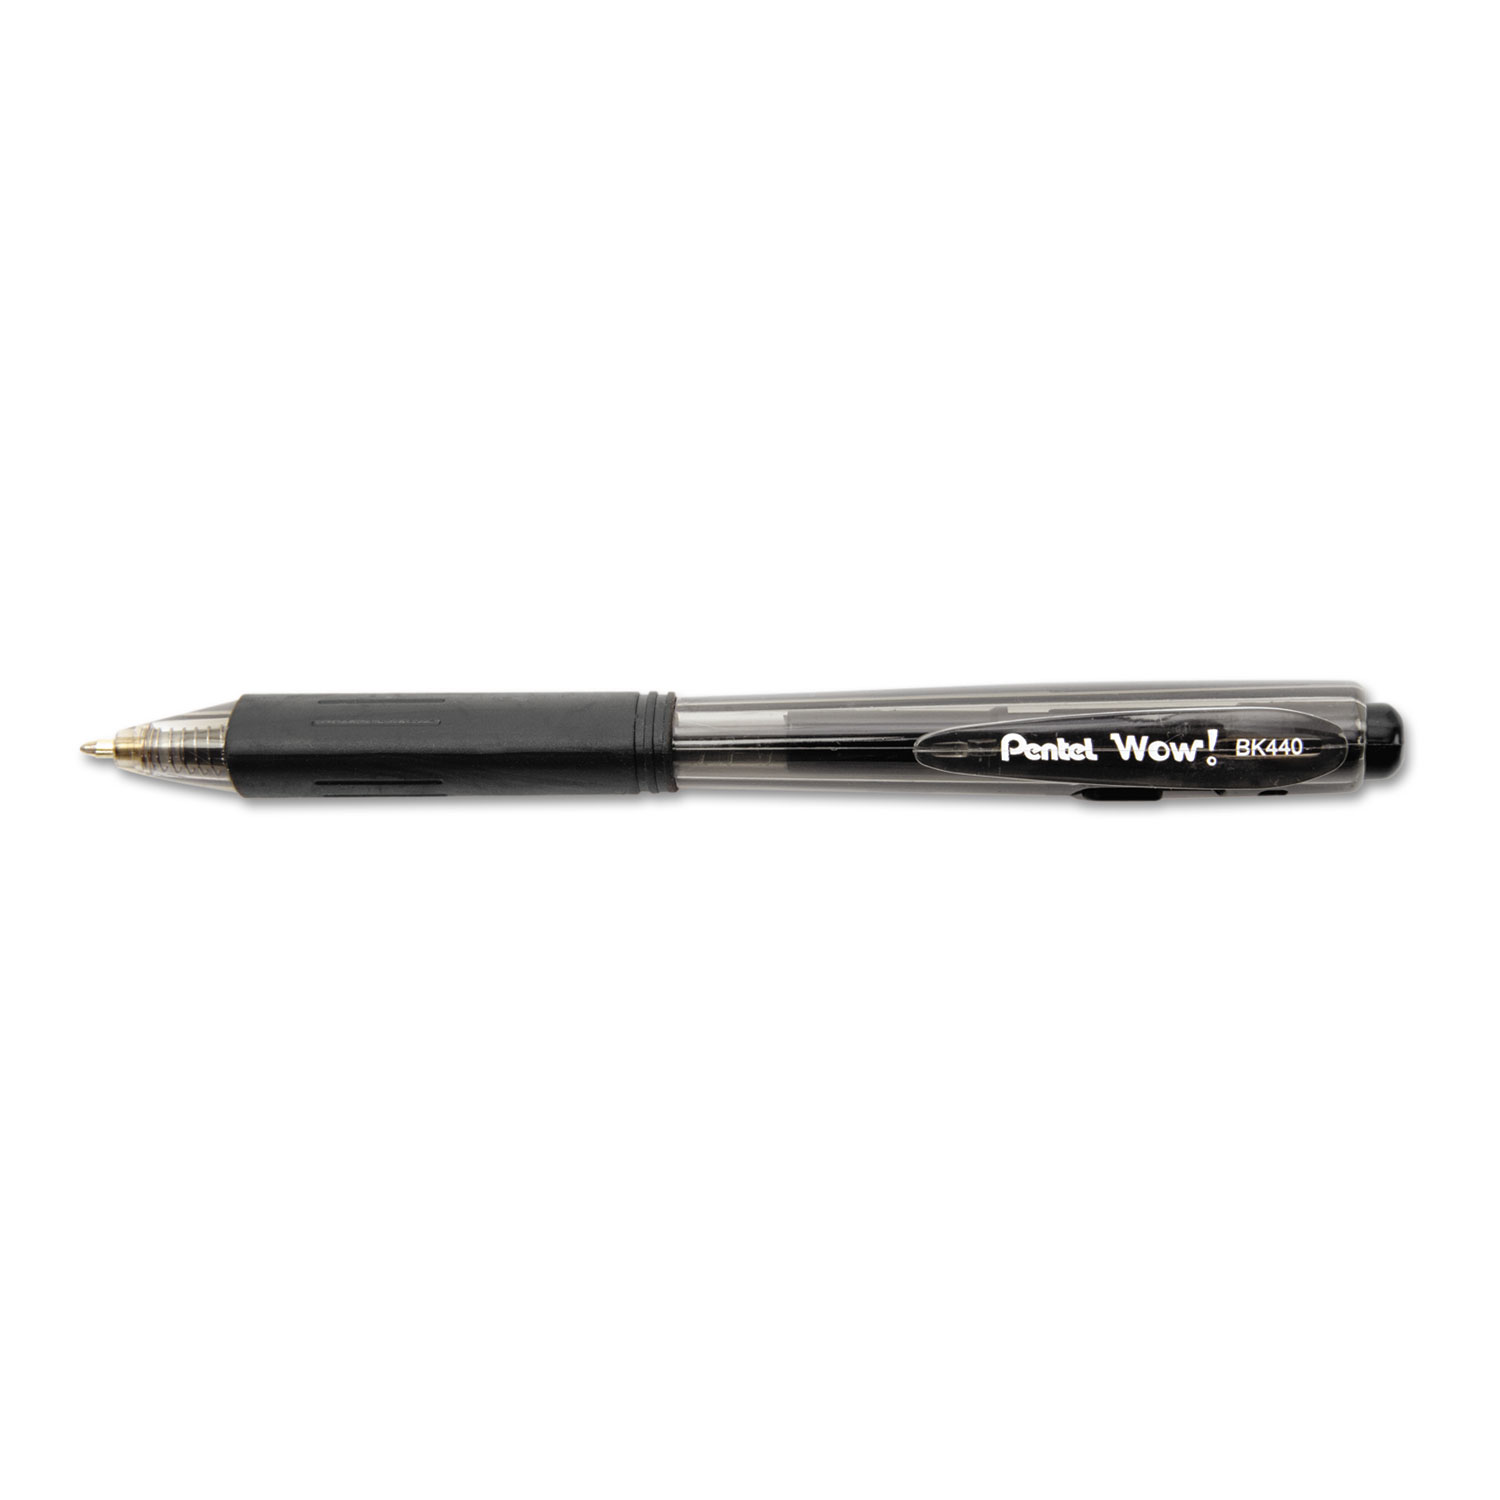 WOW! Ballpoint Pen Value Pack by Pentel® PENBK440ASWUS